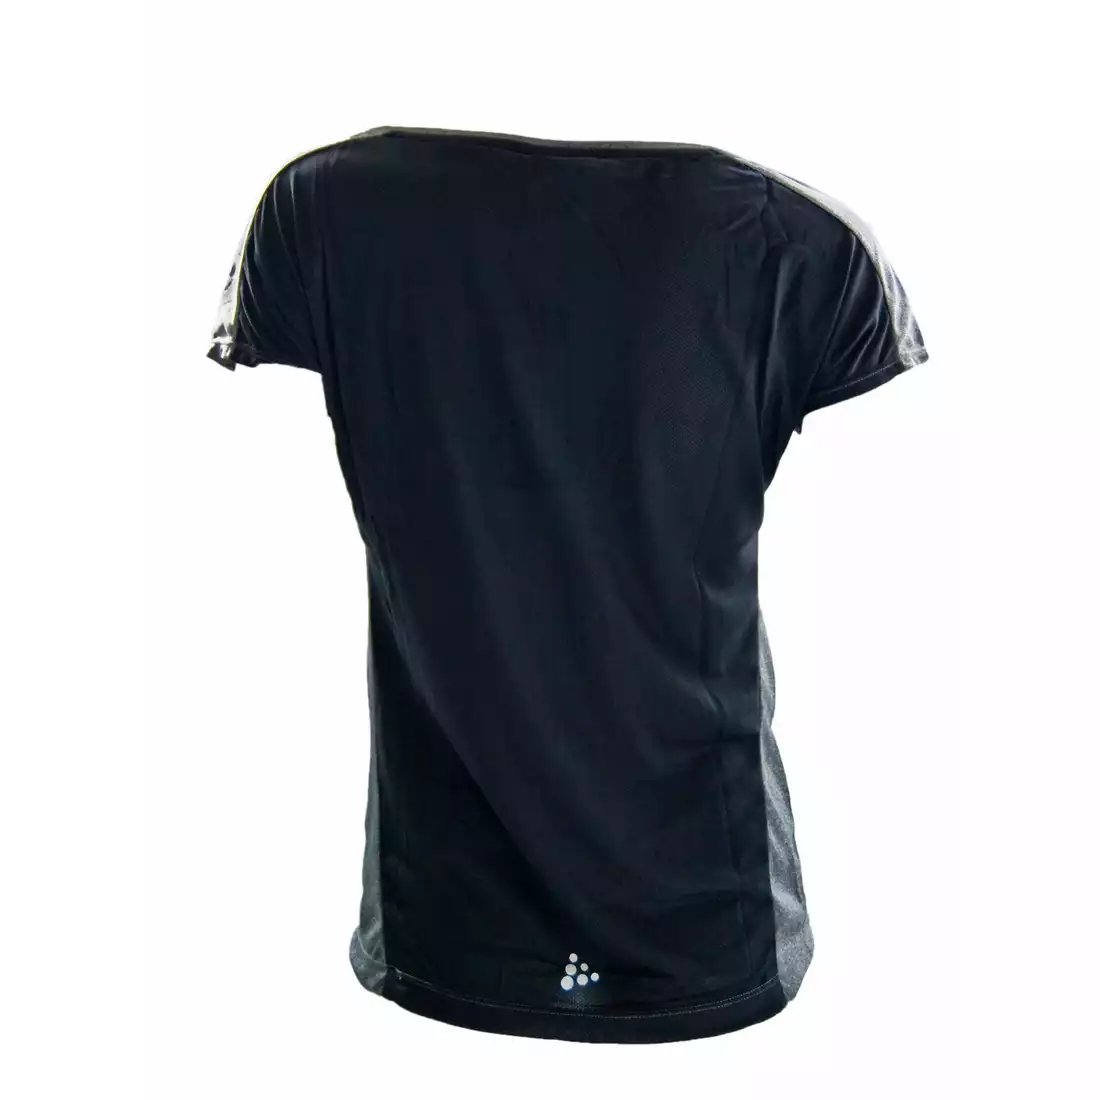 CRAFT RADIATE damska koszulka sportowa, czarno-szara, 1905382-975000